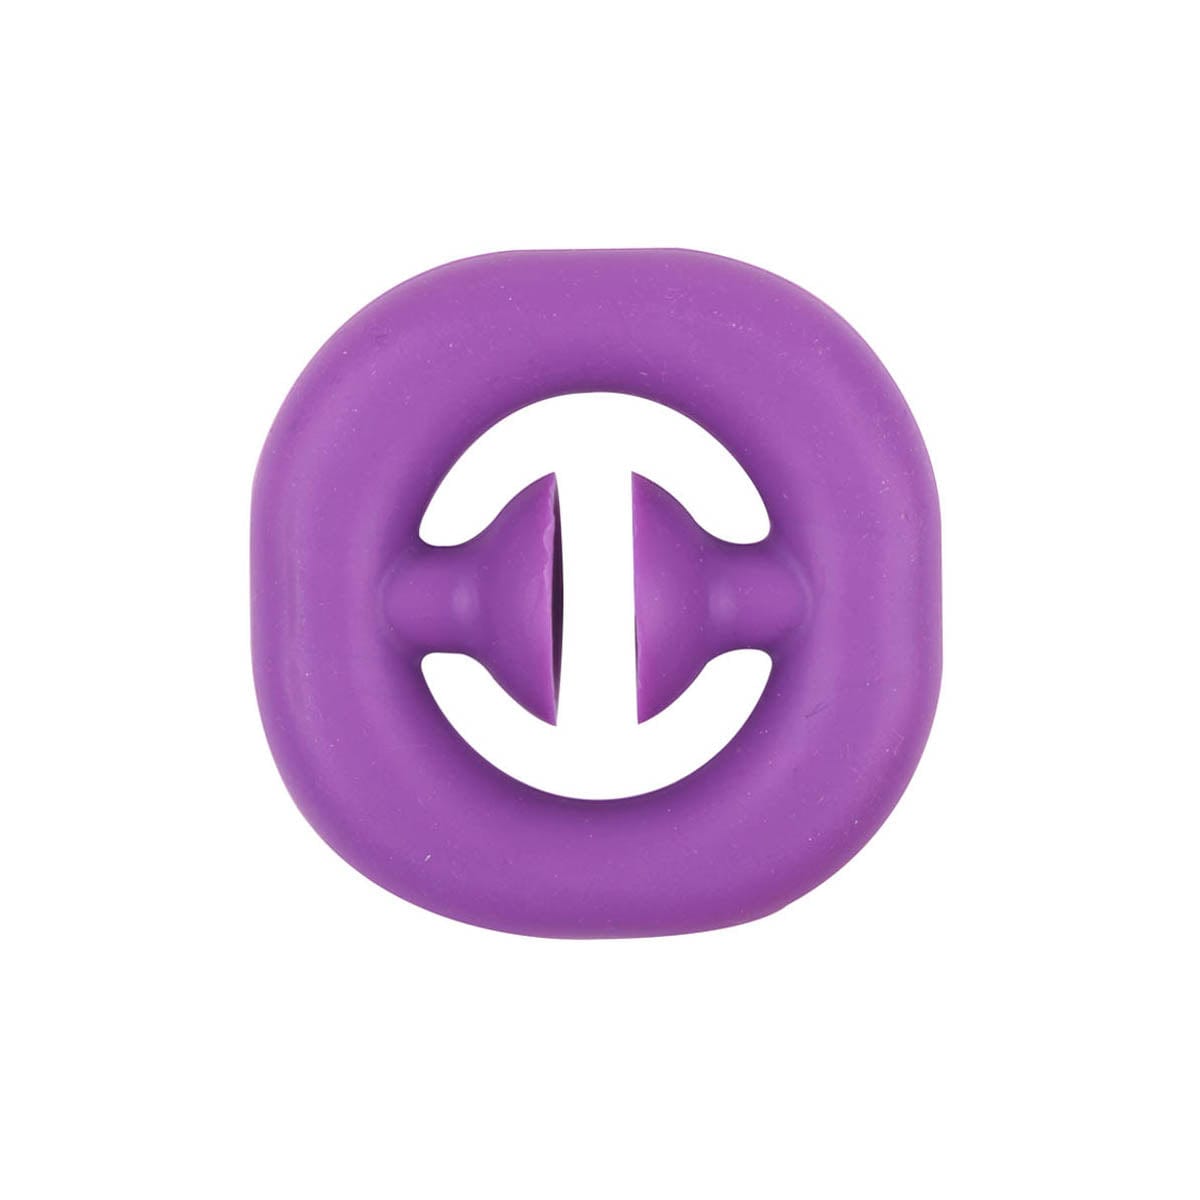 thingamaPOP Sensory Figit Toy purple